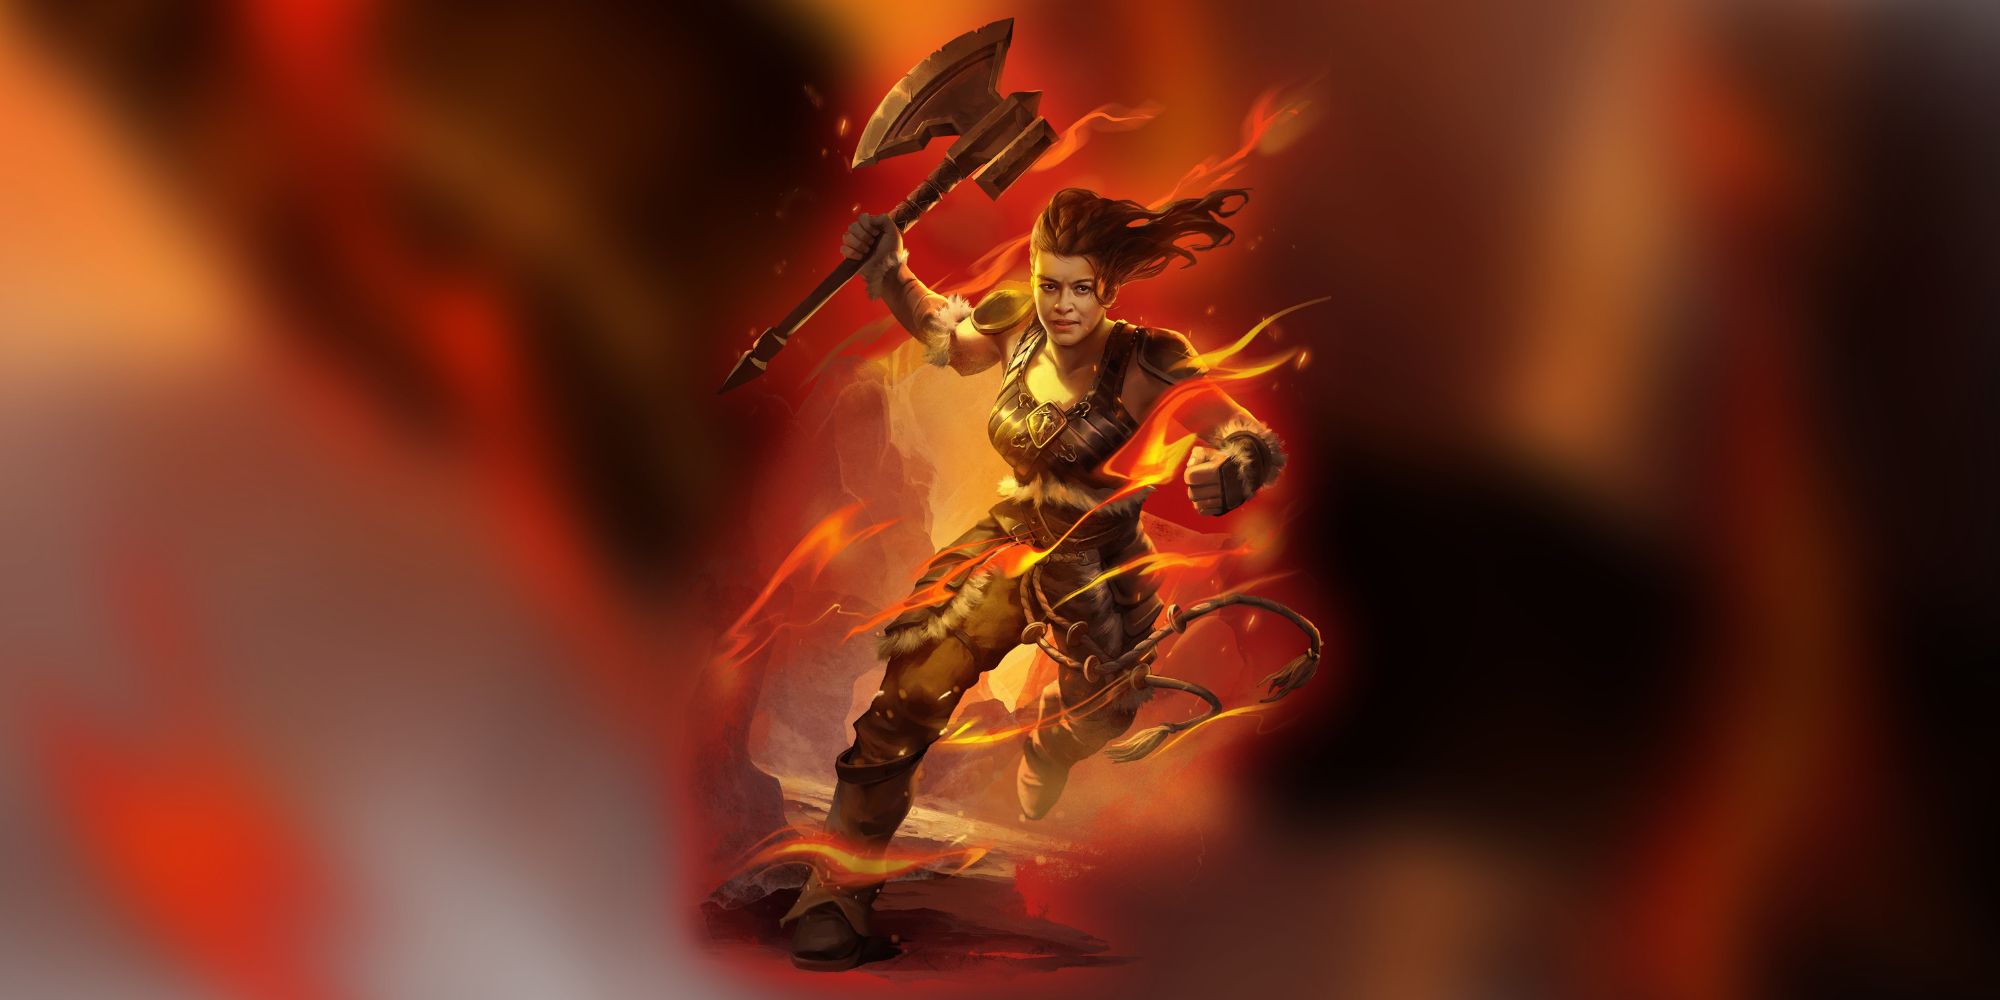 D&D - A flaming barbarian woman